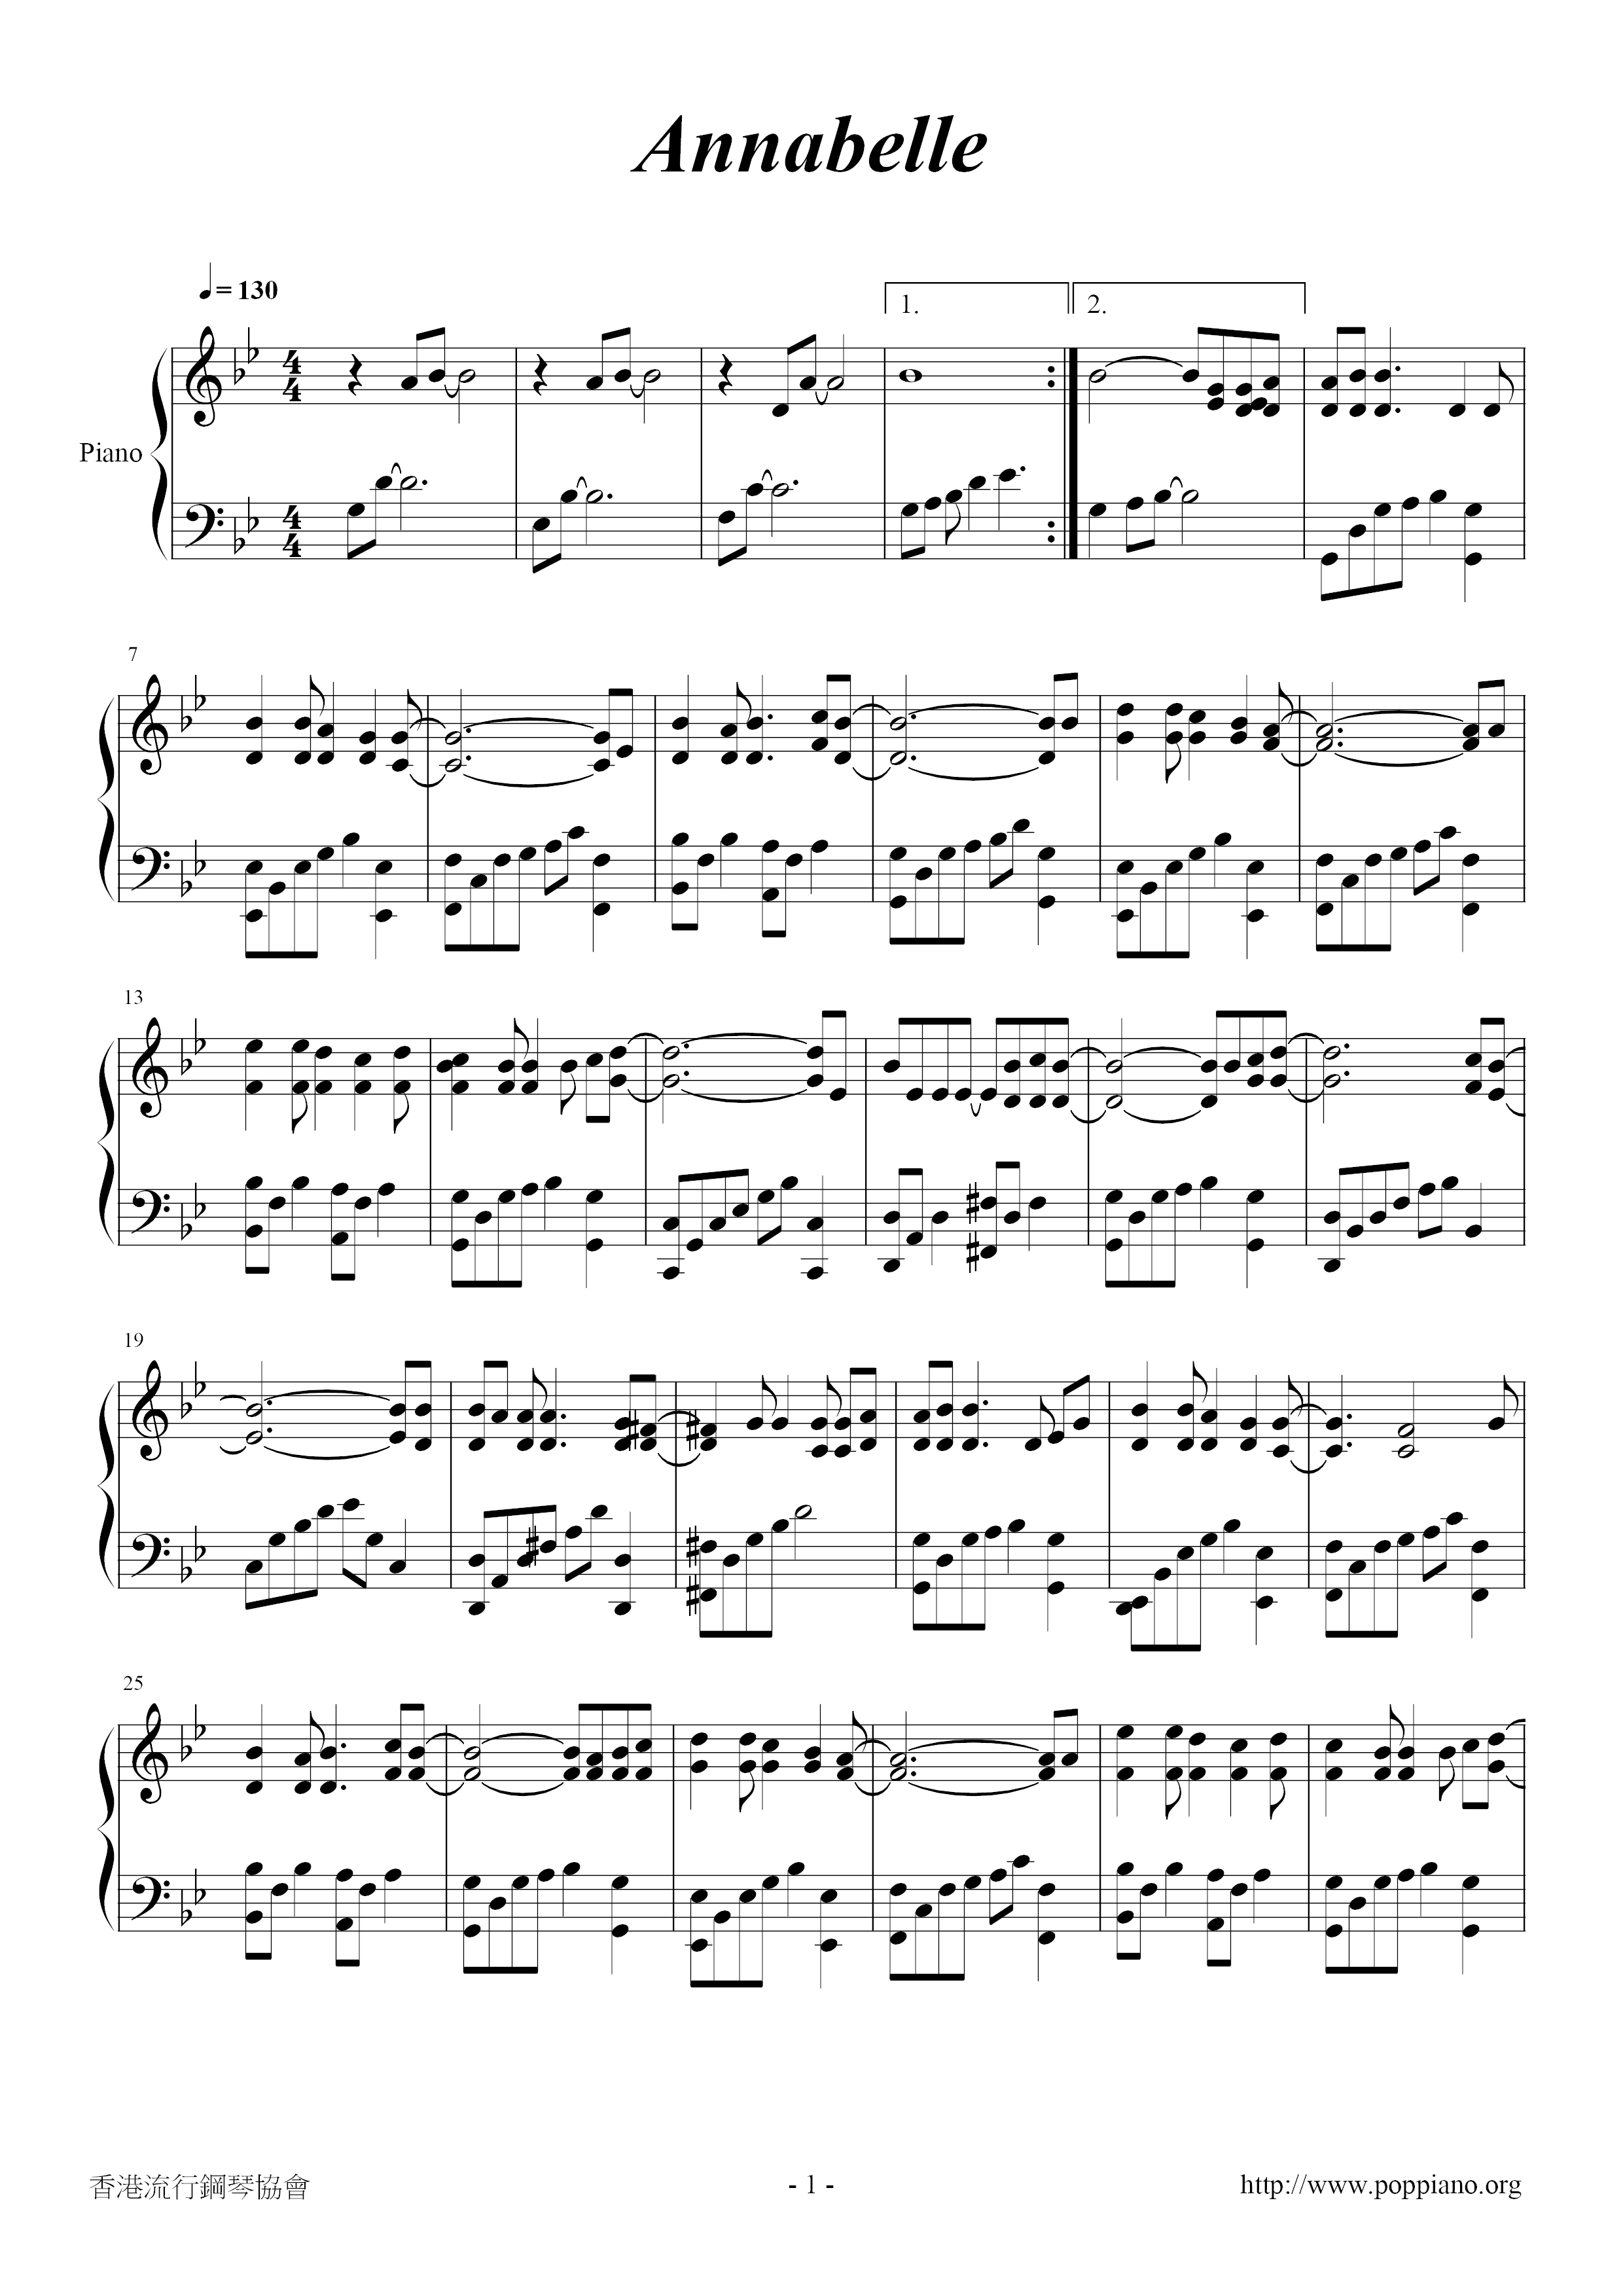 Annabelle Score